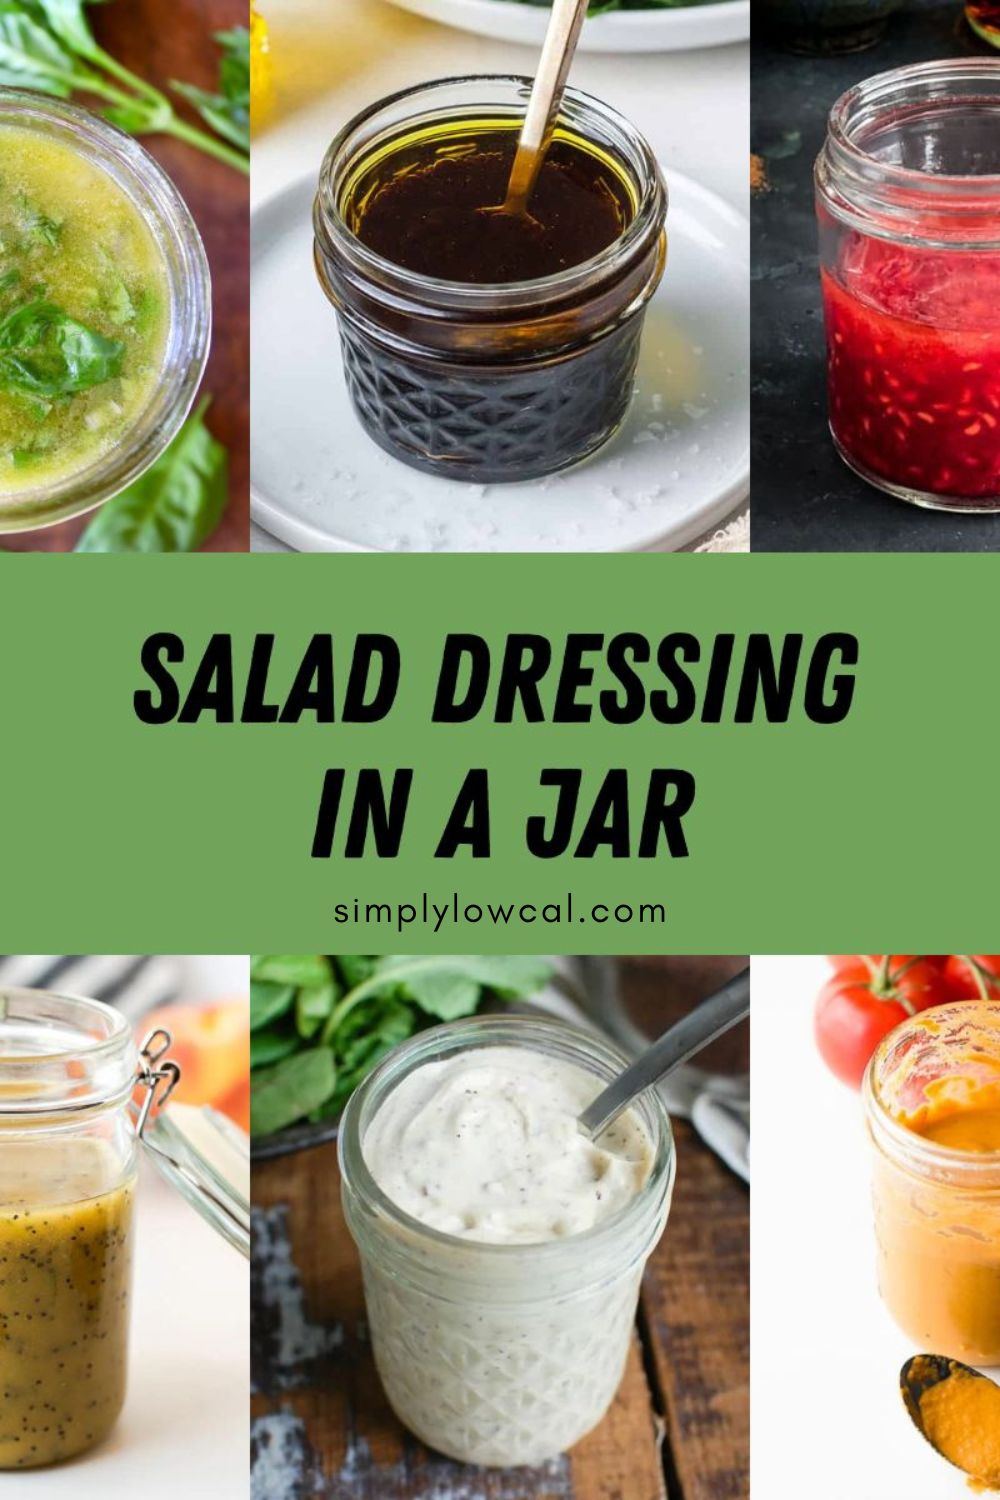 Pinterest pin of salad dressing in a jar.